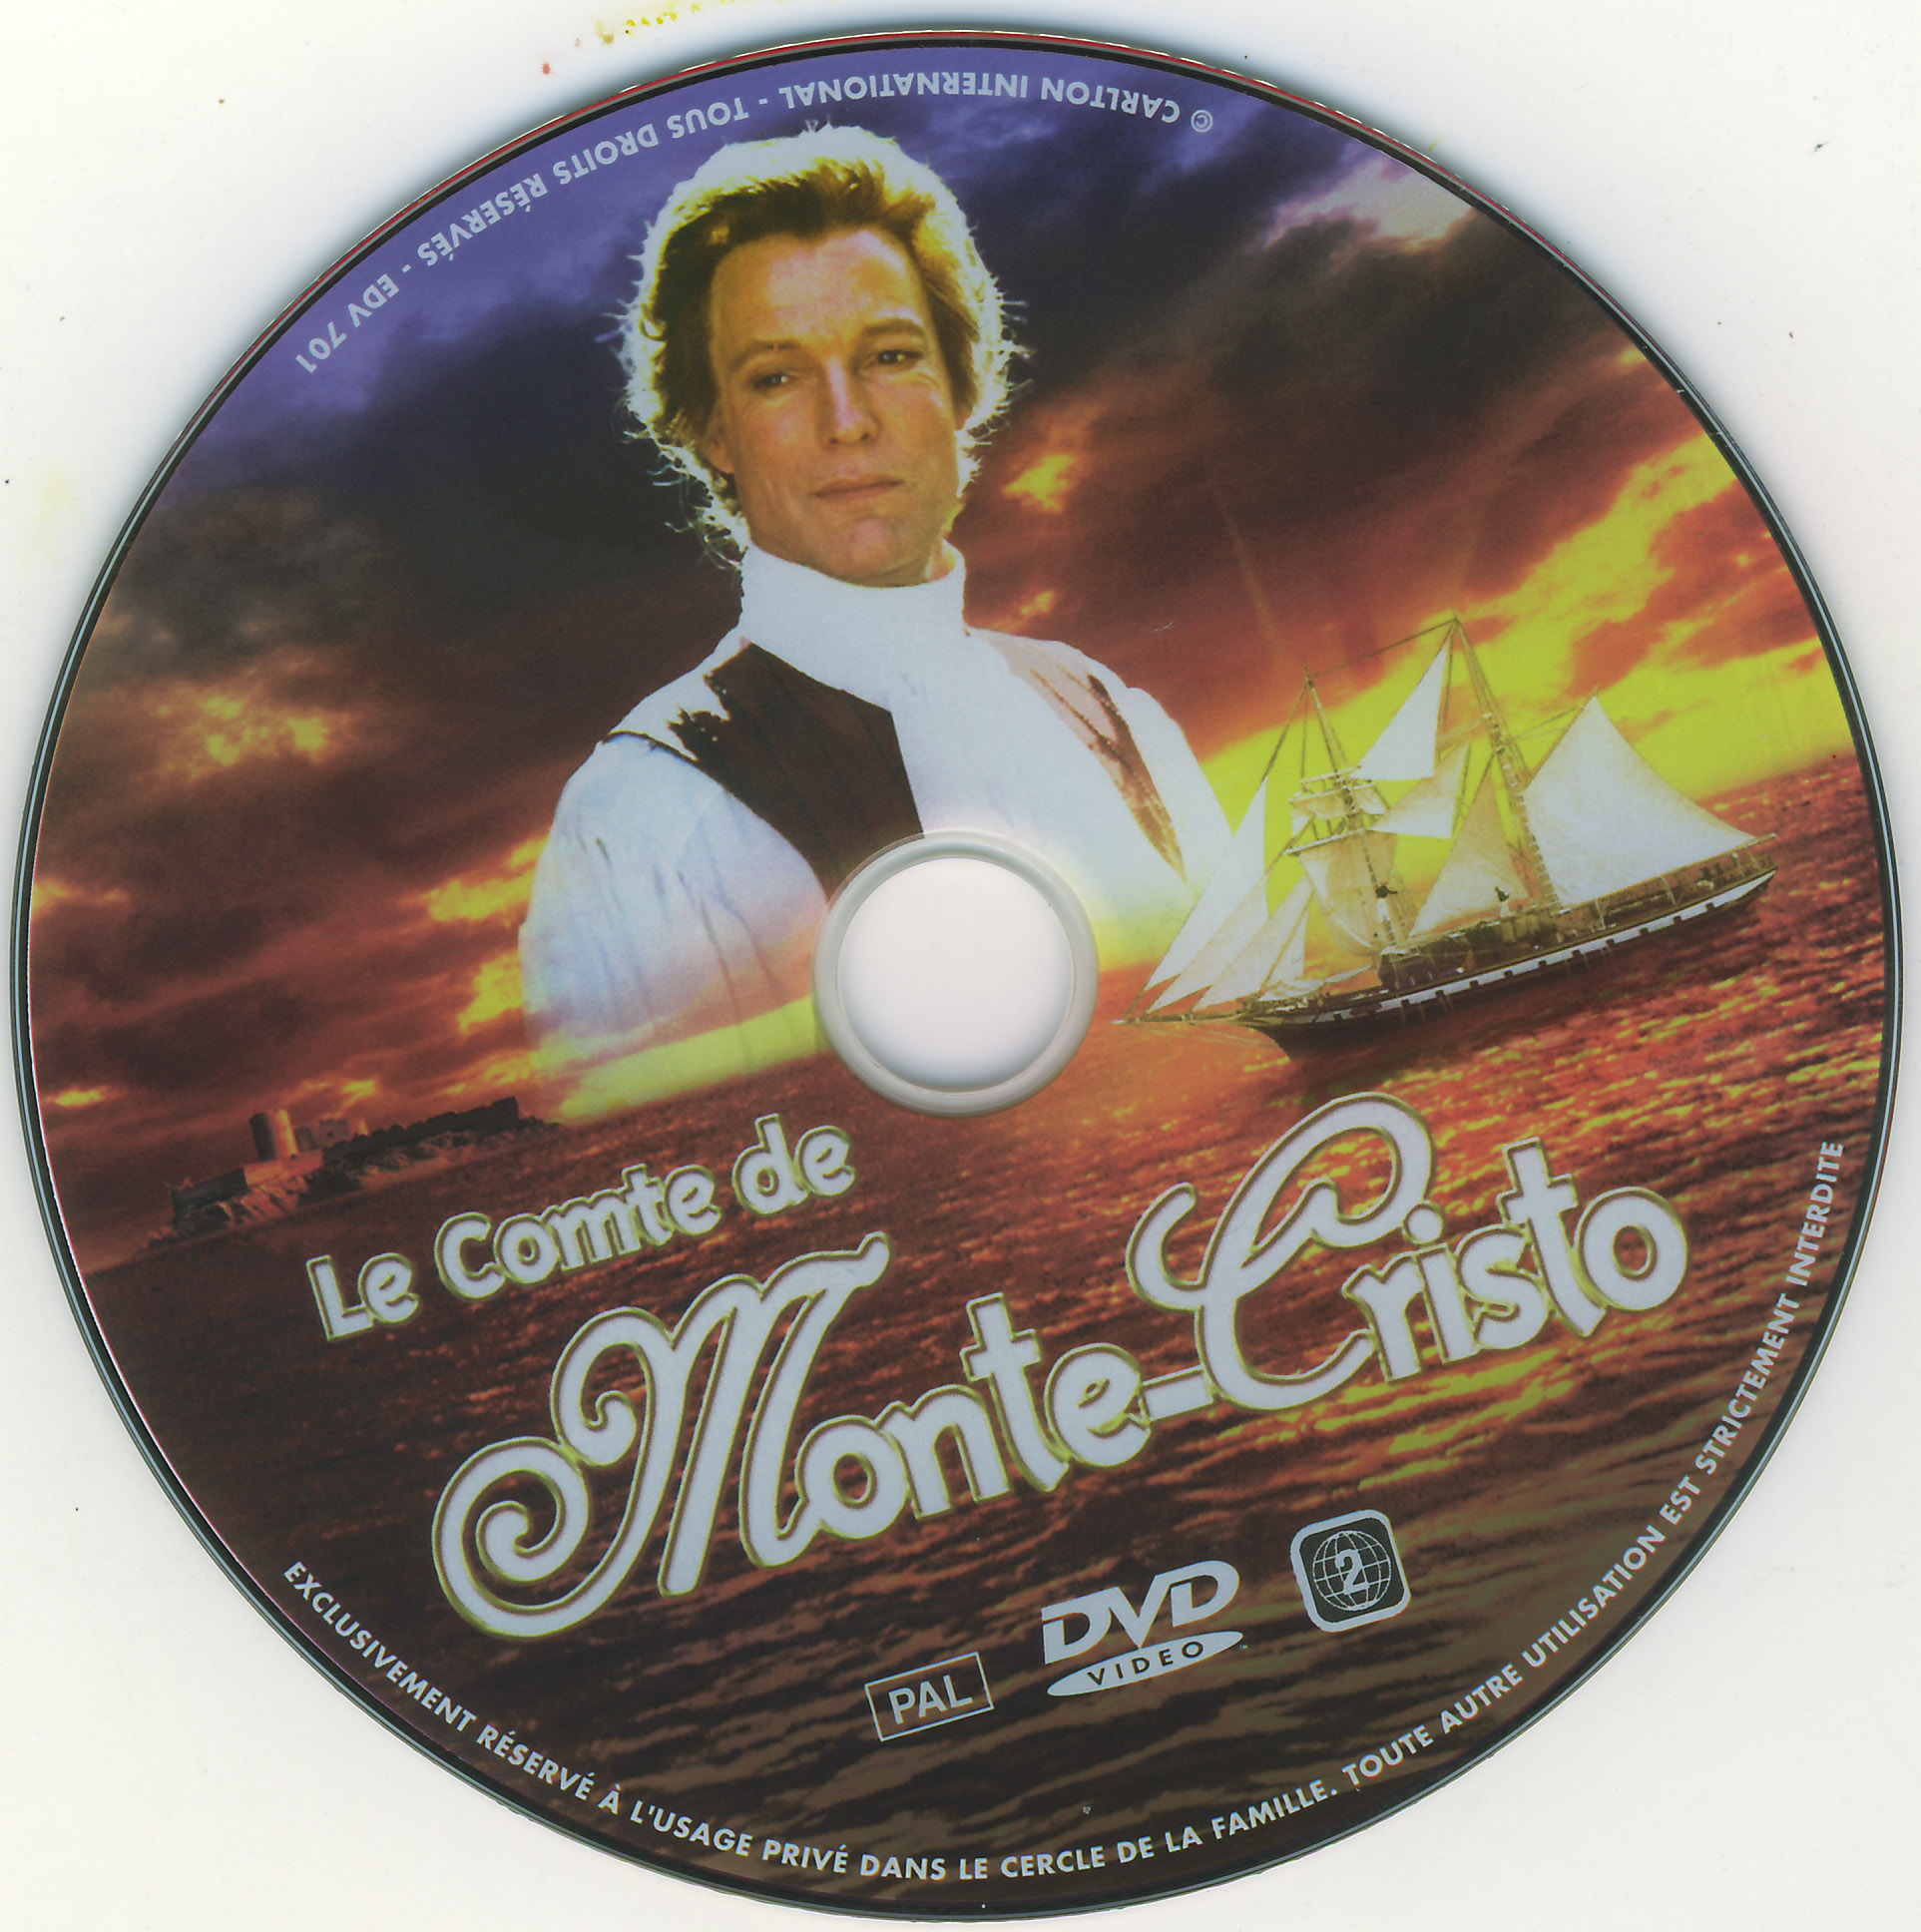 Le Comte de Monte-Cristo (Richard Chamberlain)